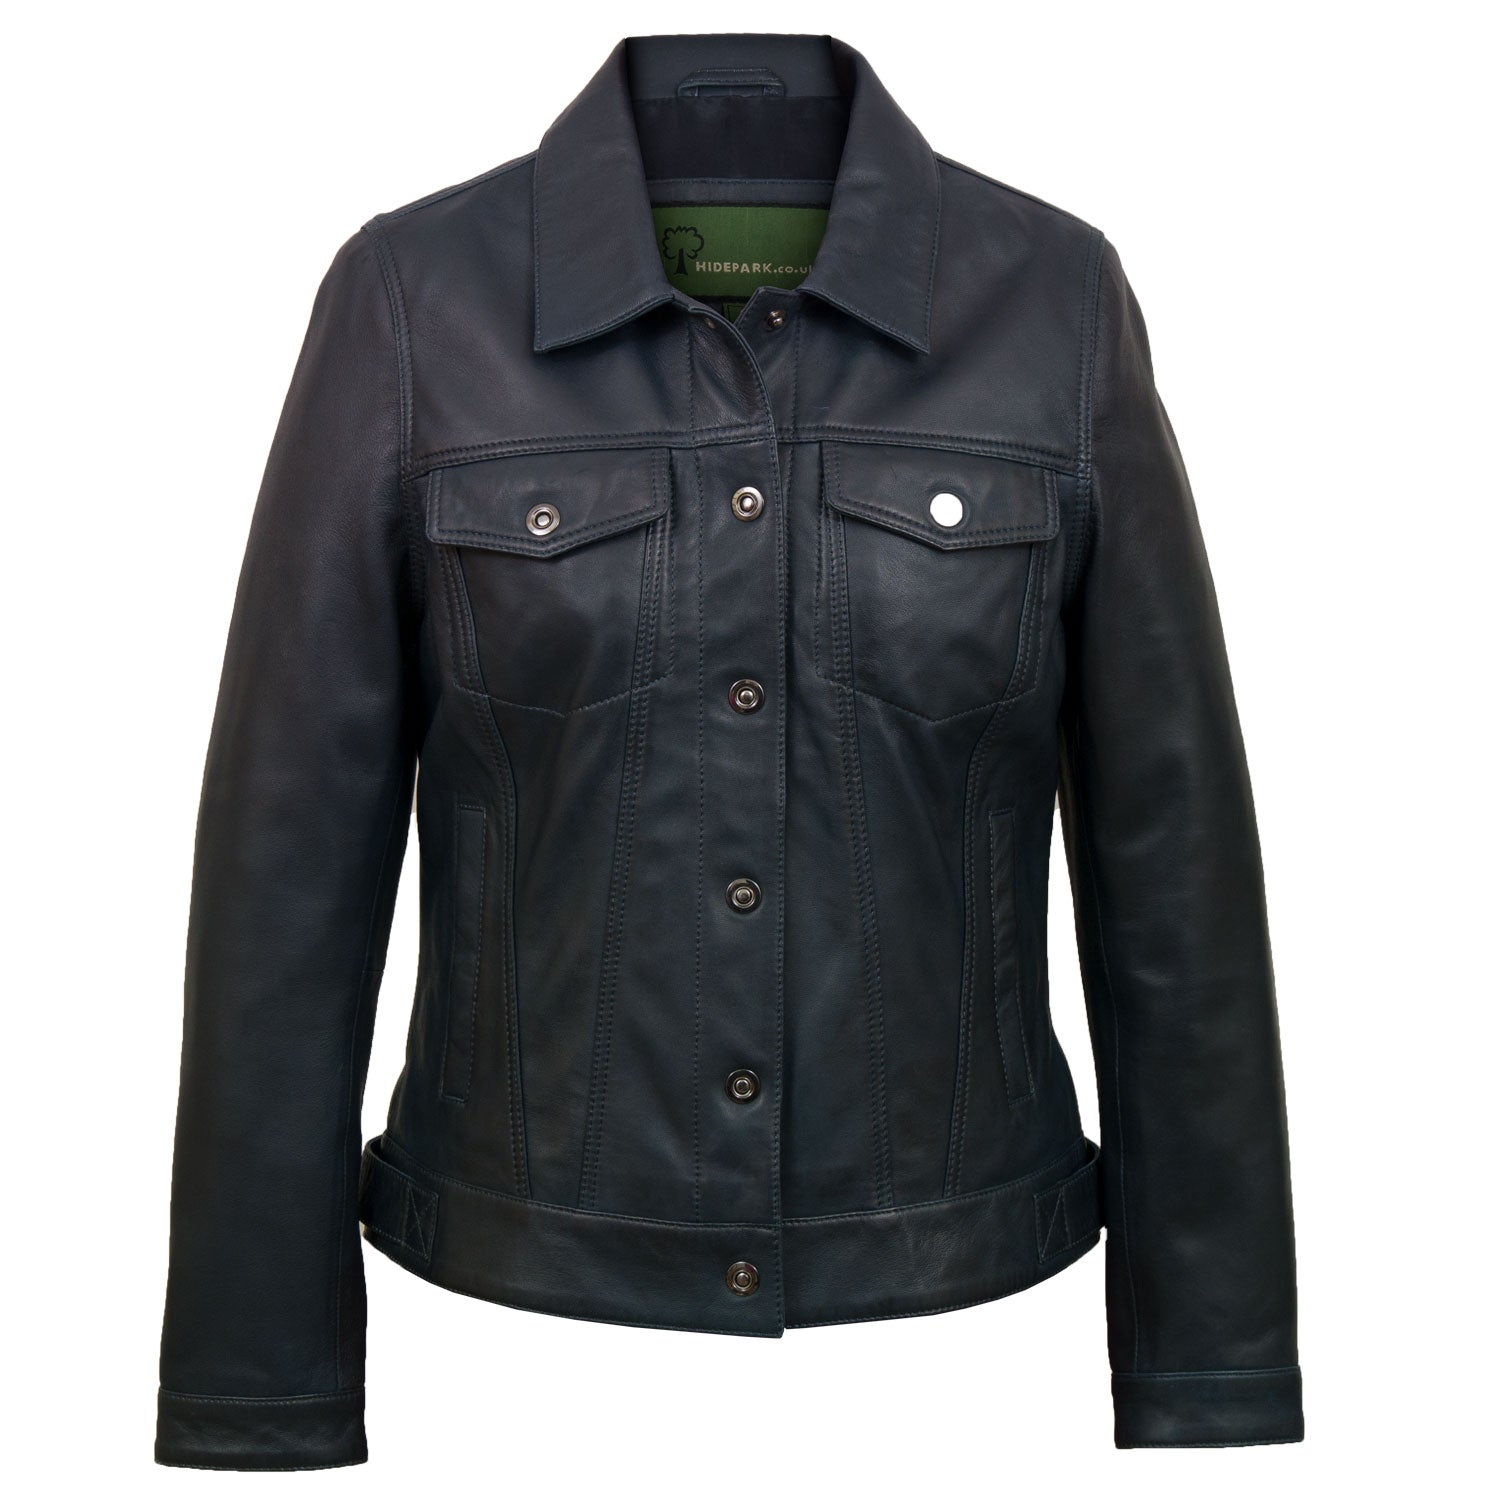 Tilly: Women's Navy Denim Style Leather Jacket